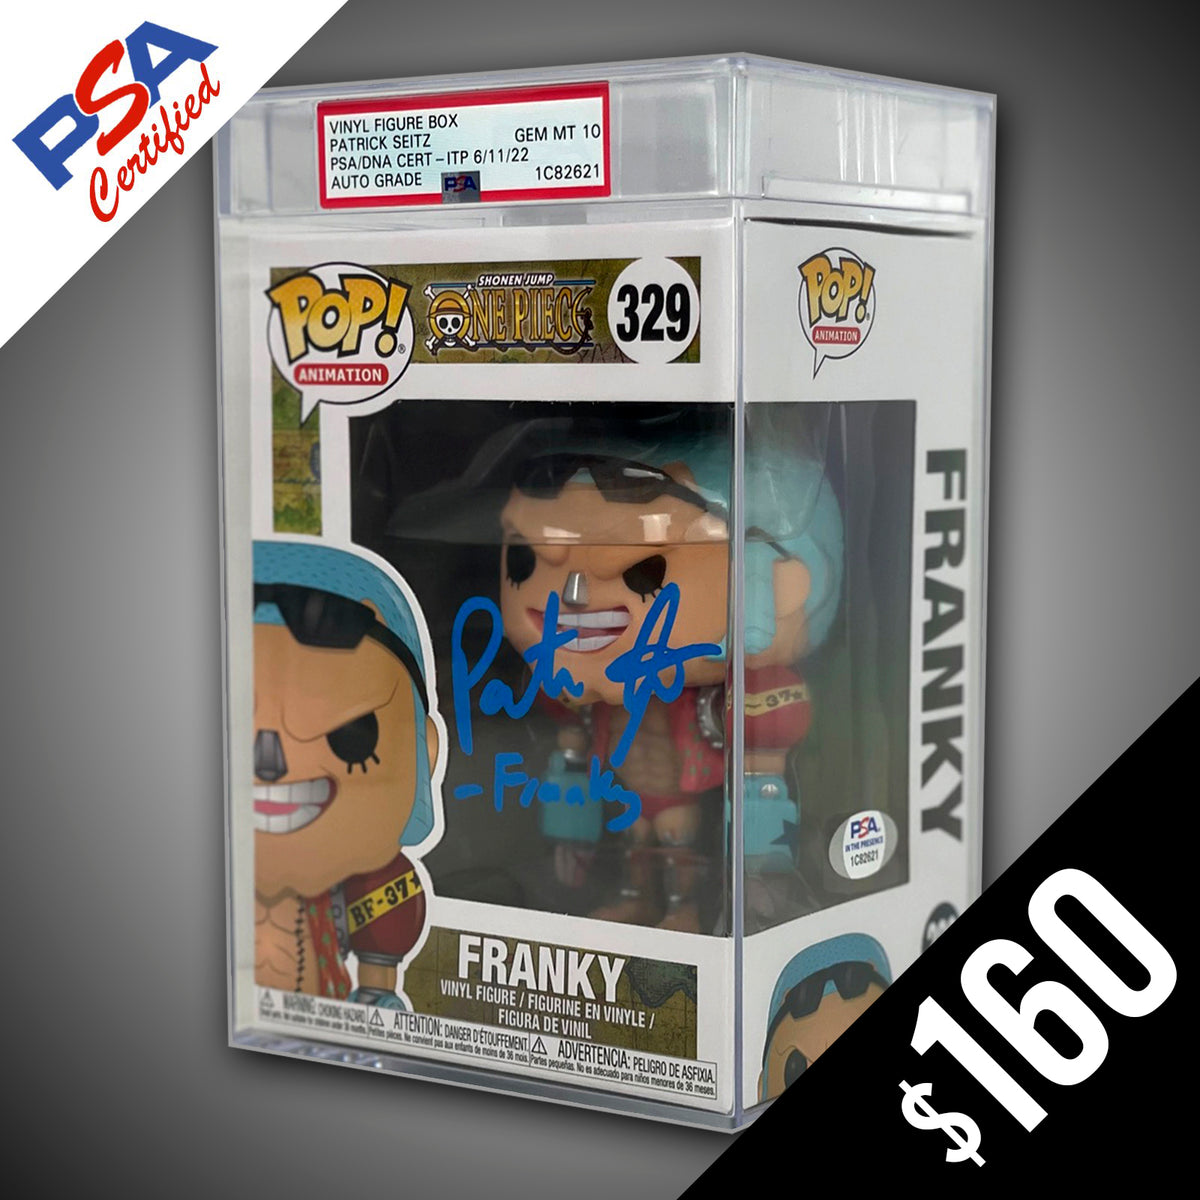 Funko Pop! One Piece: Franky SIGNED by Patrick Seitz (PSA